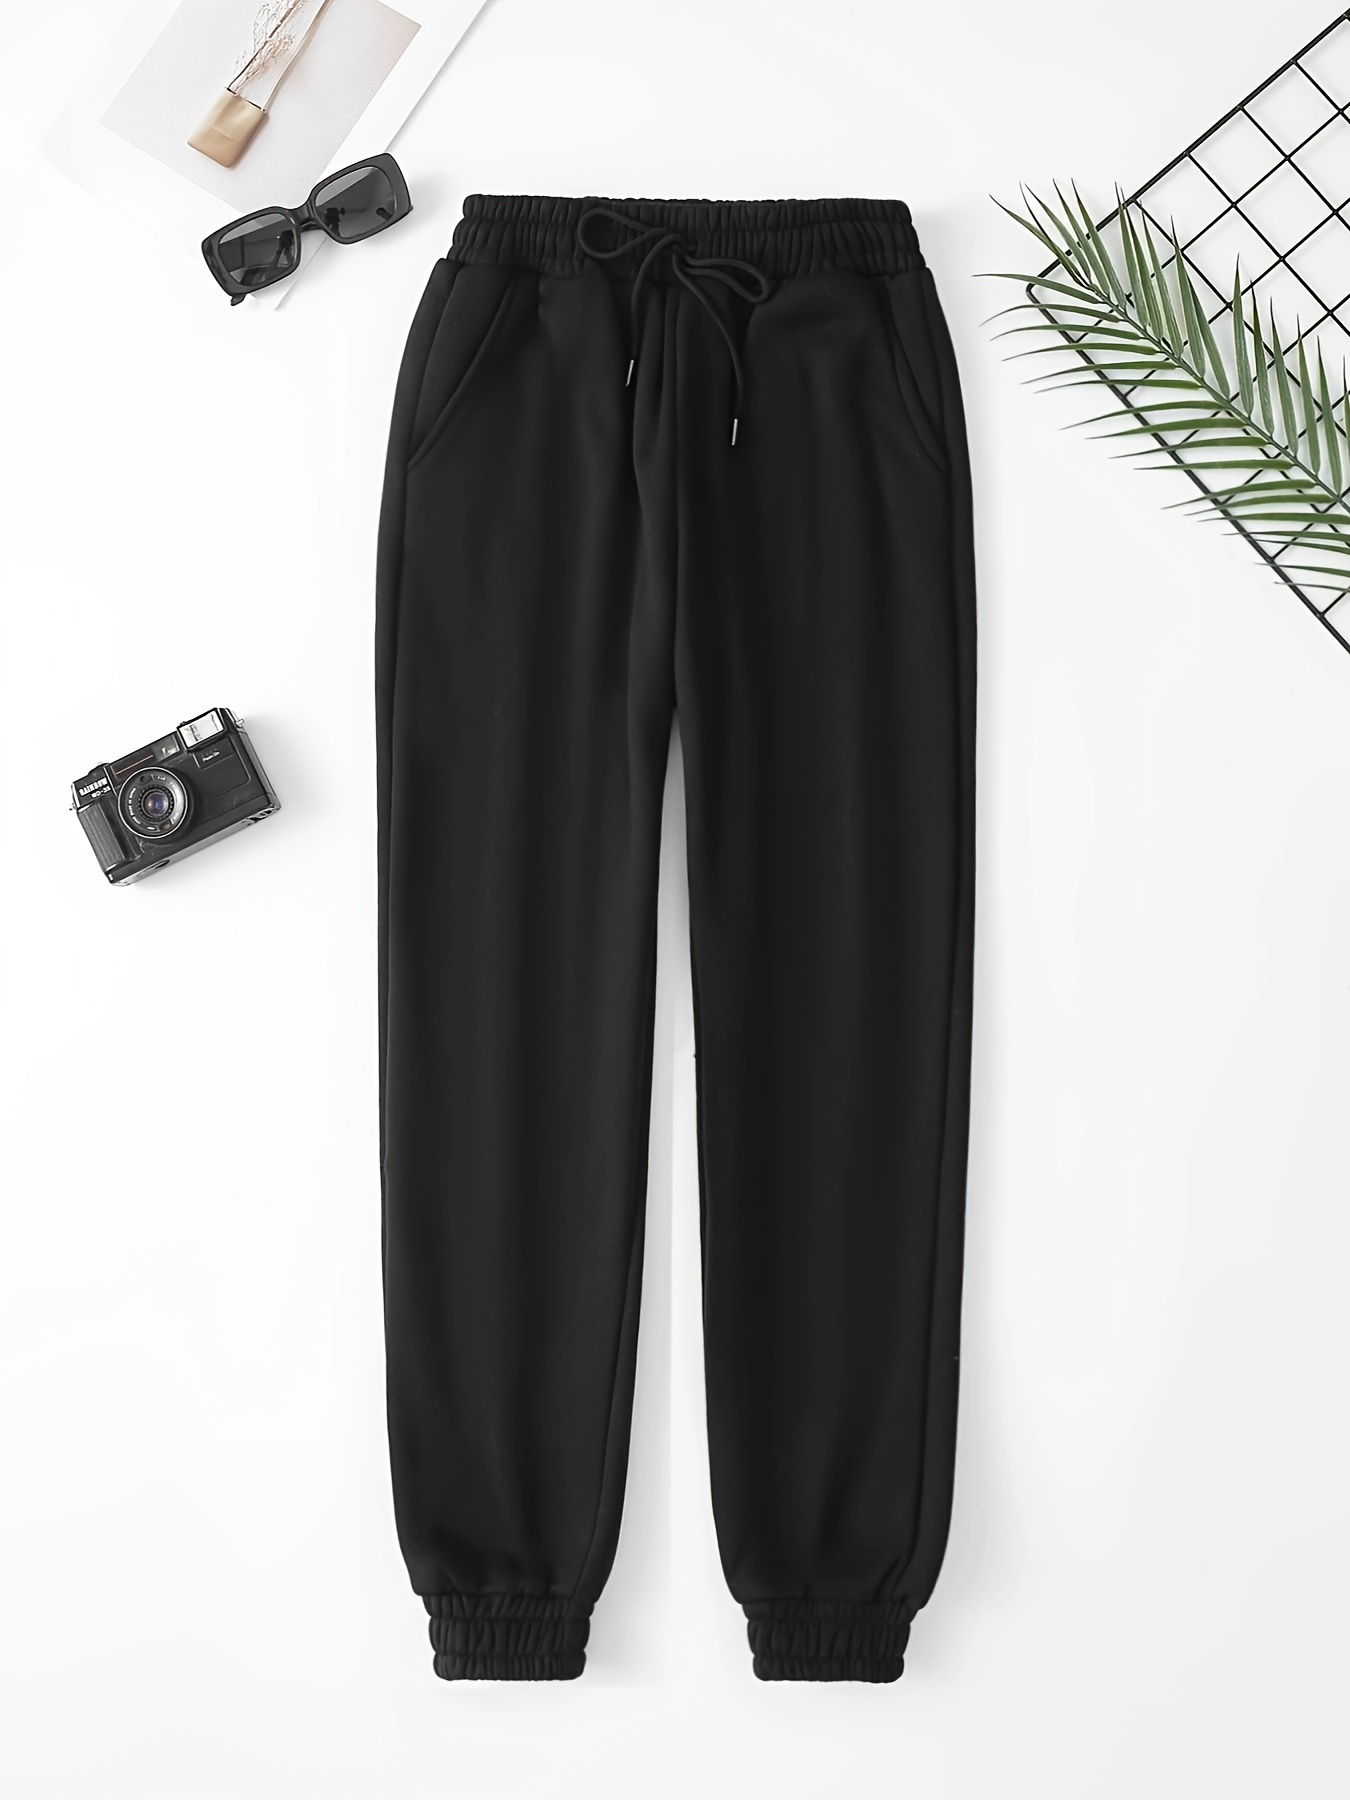 YWDJ Joggers for Women High Waist Tummy Control Fashion Ladies Casual  Elastic Ladies Waist Loose Pockets Printed Pants Black L 